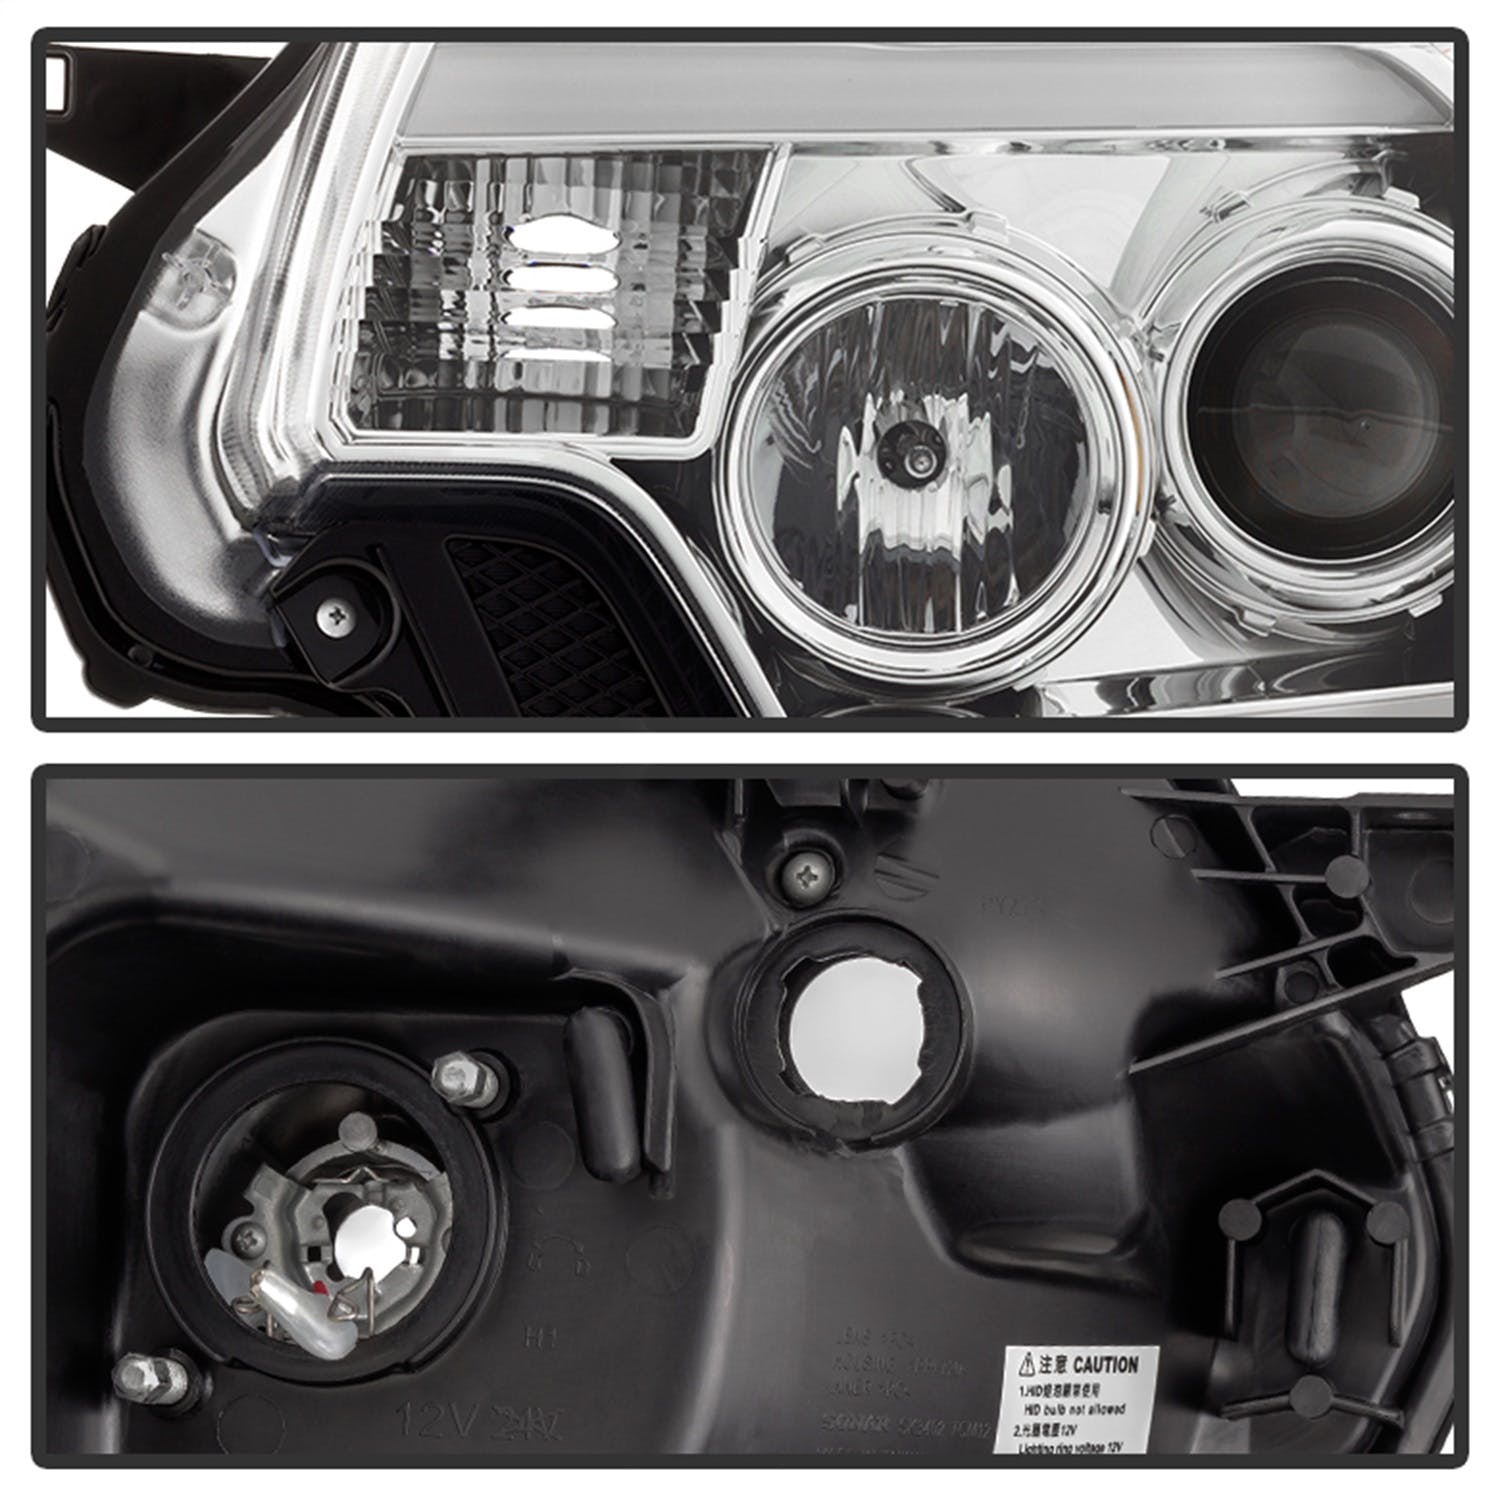 Spyder Auto 5081704 (Spyder) Toyota Tacoma 12-15 Projector Headlights-Light Bar DRL-Chrome